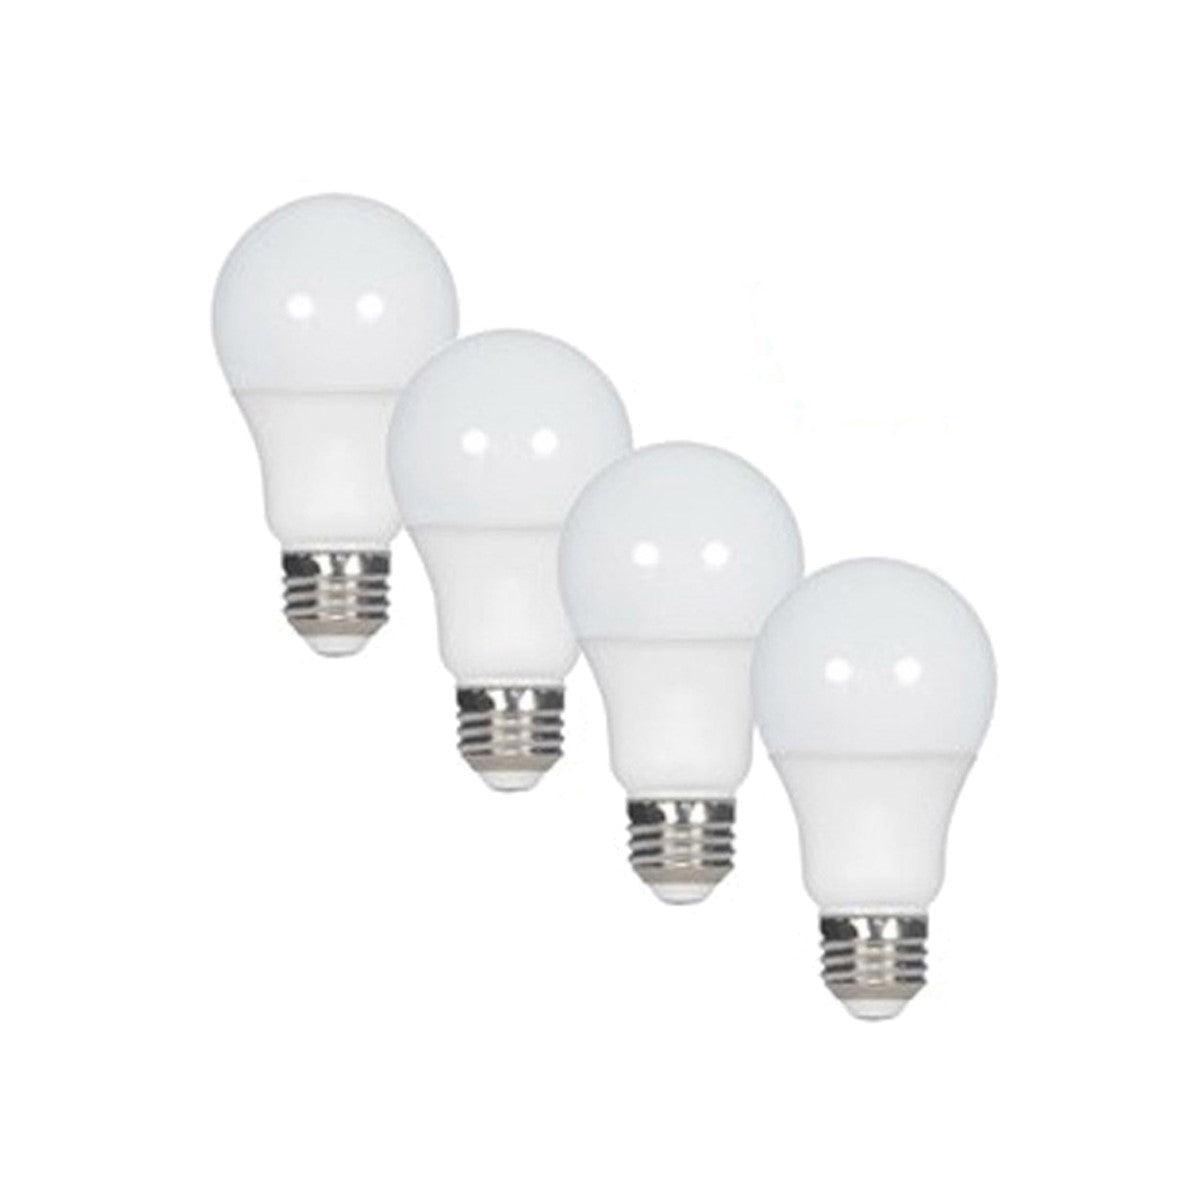 A19 LED Bulb, 75W Equivalent, 13 Watt, 1050 Lumens, 5000K, E26 Medium Base, Frosted Finish, Pack Of 4